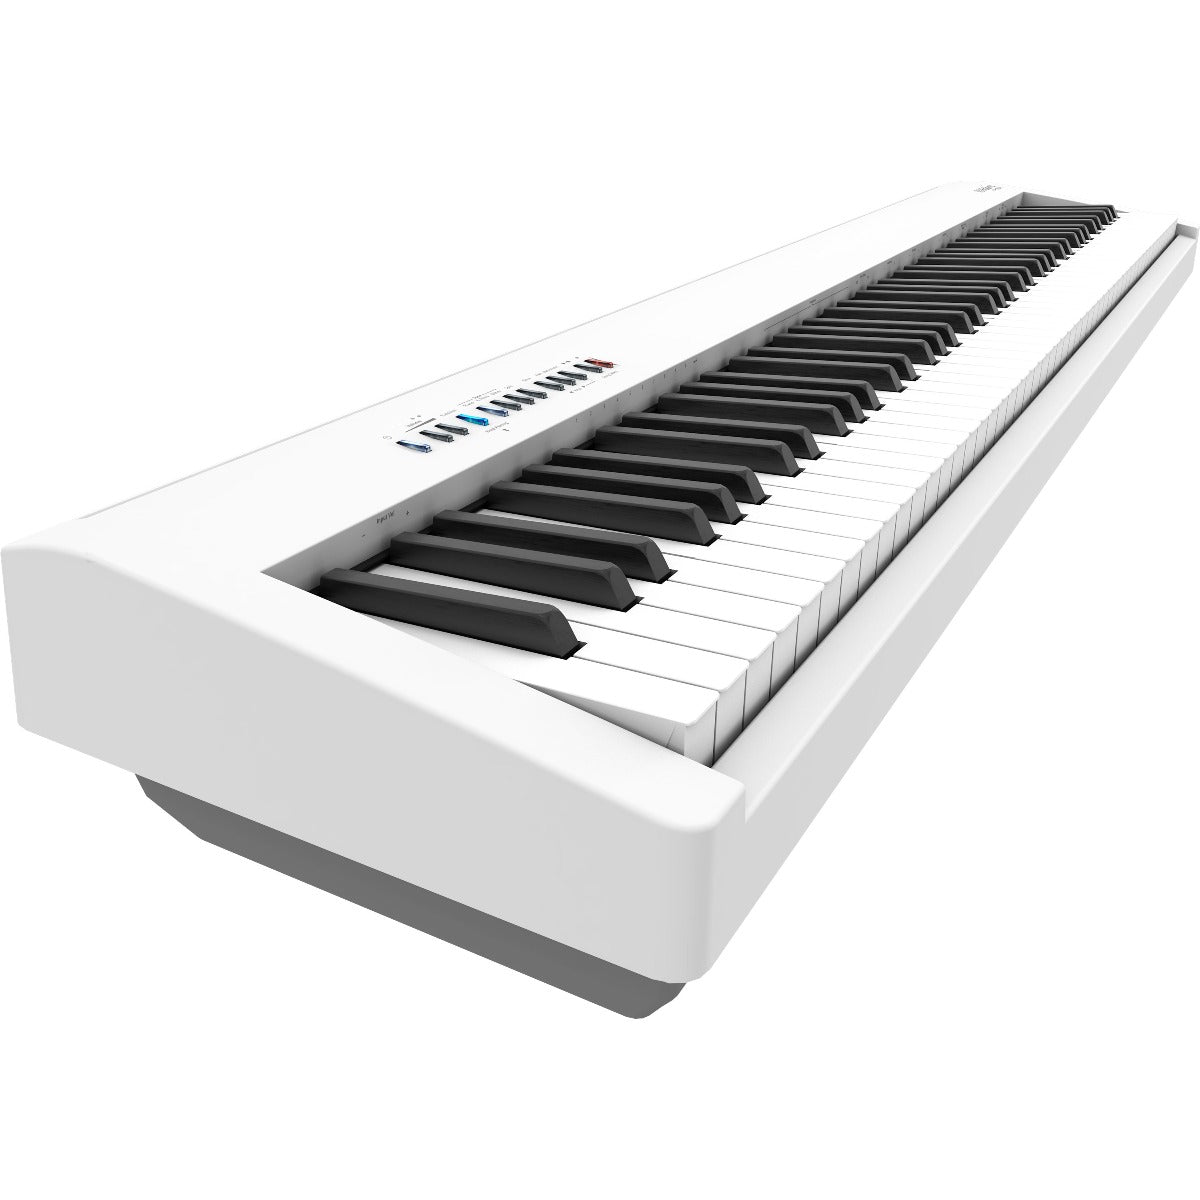 Roland FP-30X Digital Piano - White COMPLETE HOME BUNDLE PLUS – Kraft Music